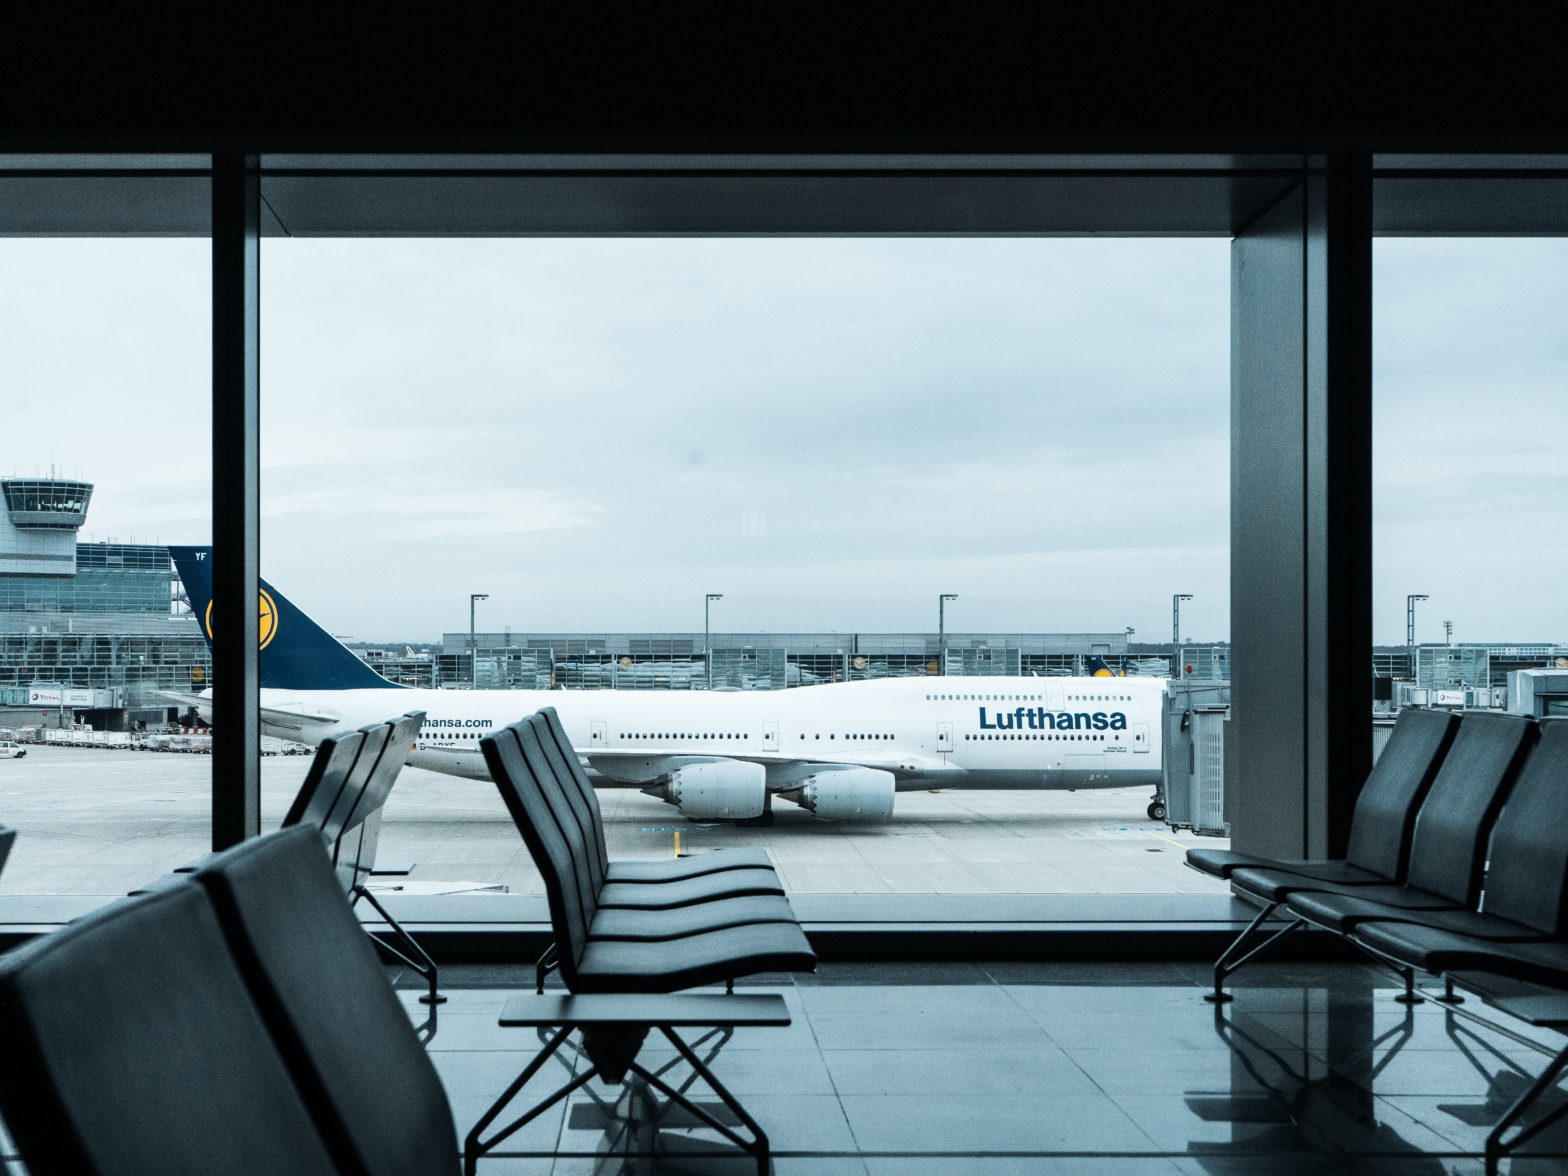 Lufthansa Will No Longer Address Passengers As "Ladies And Gentlemen"